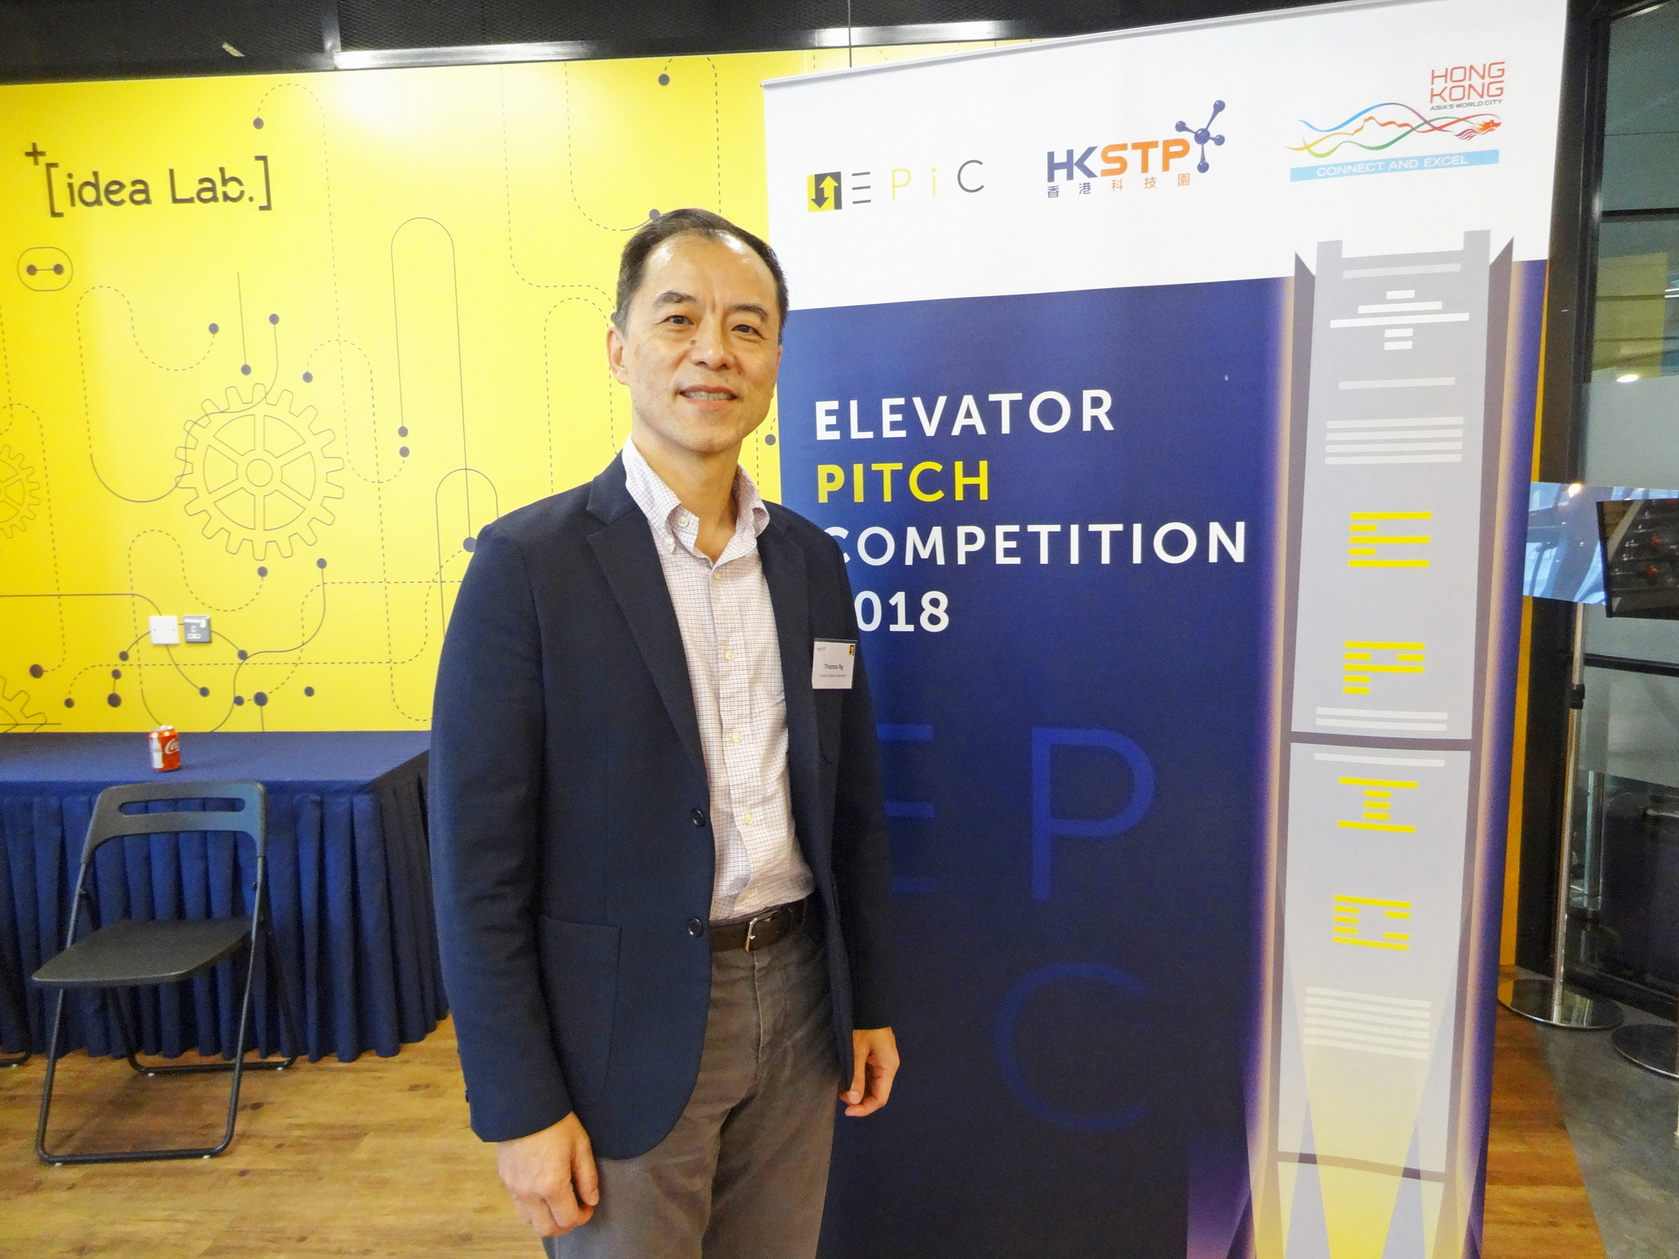 Coraisa Global Investment行政總裁Thomas Ng提醒參賽者說話不要太快，要重要是清楚易明。